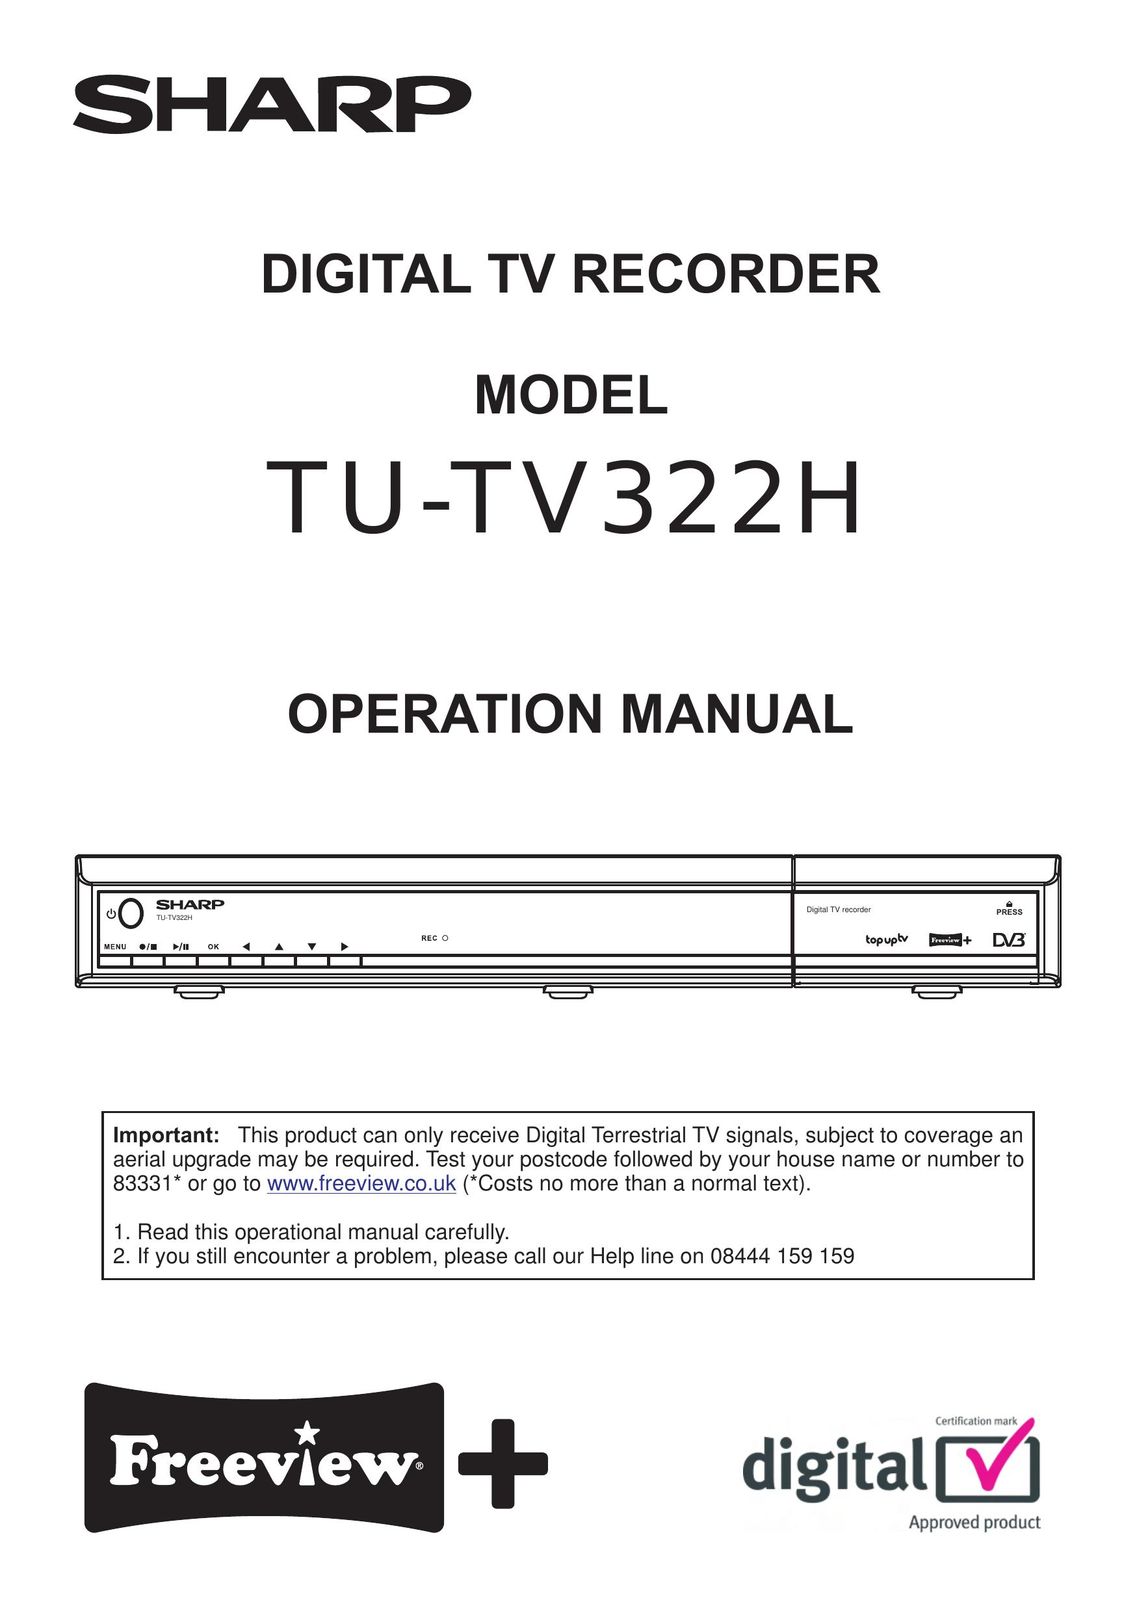 Sharp TU-TV322H DVR User Manual